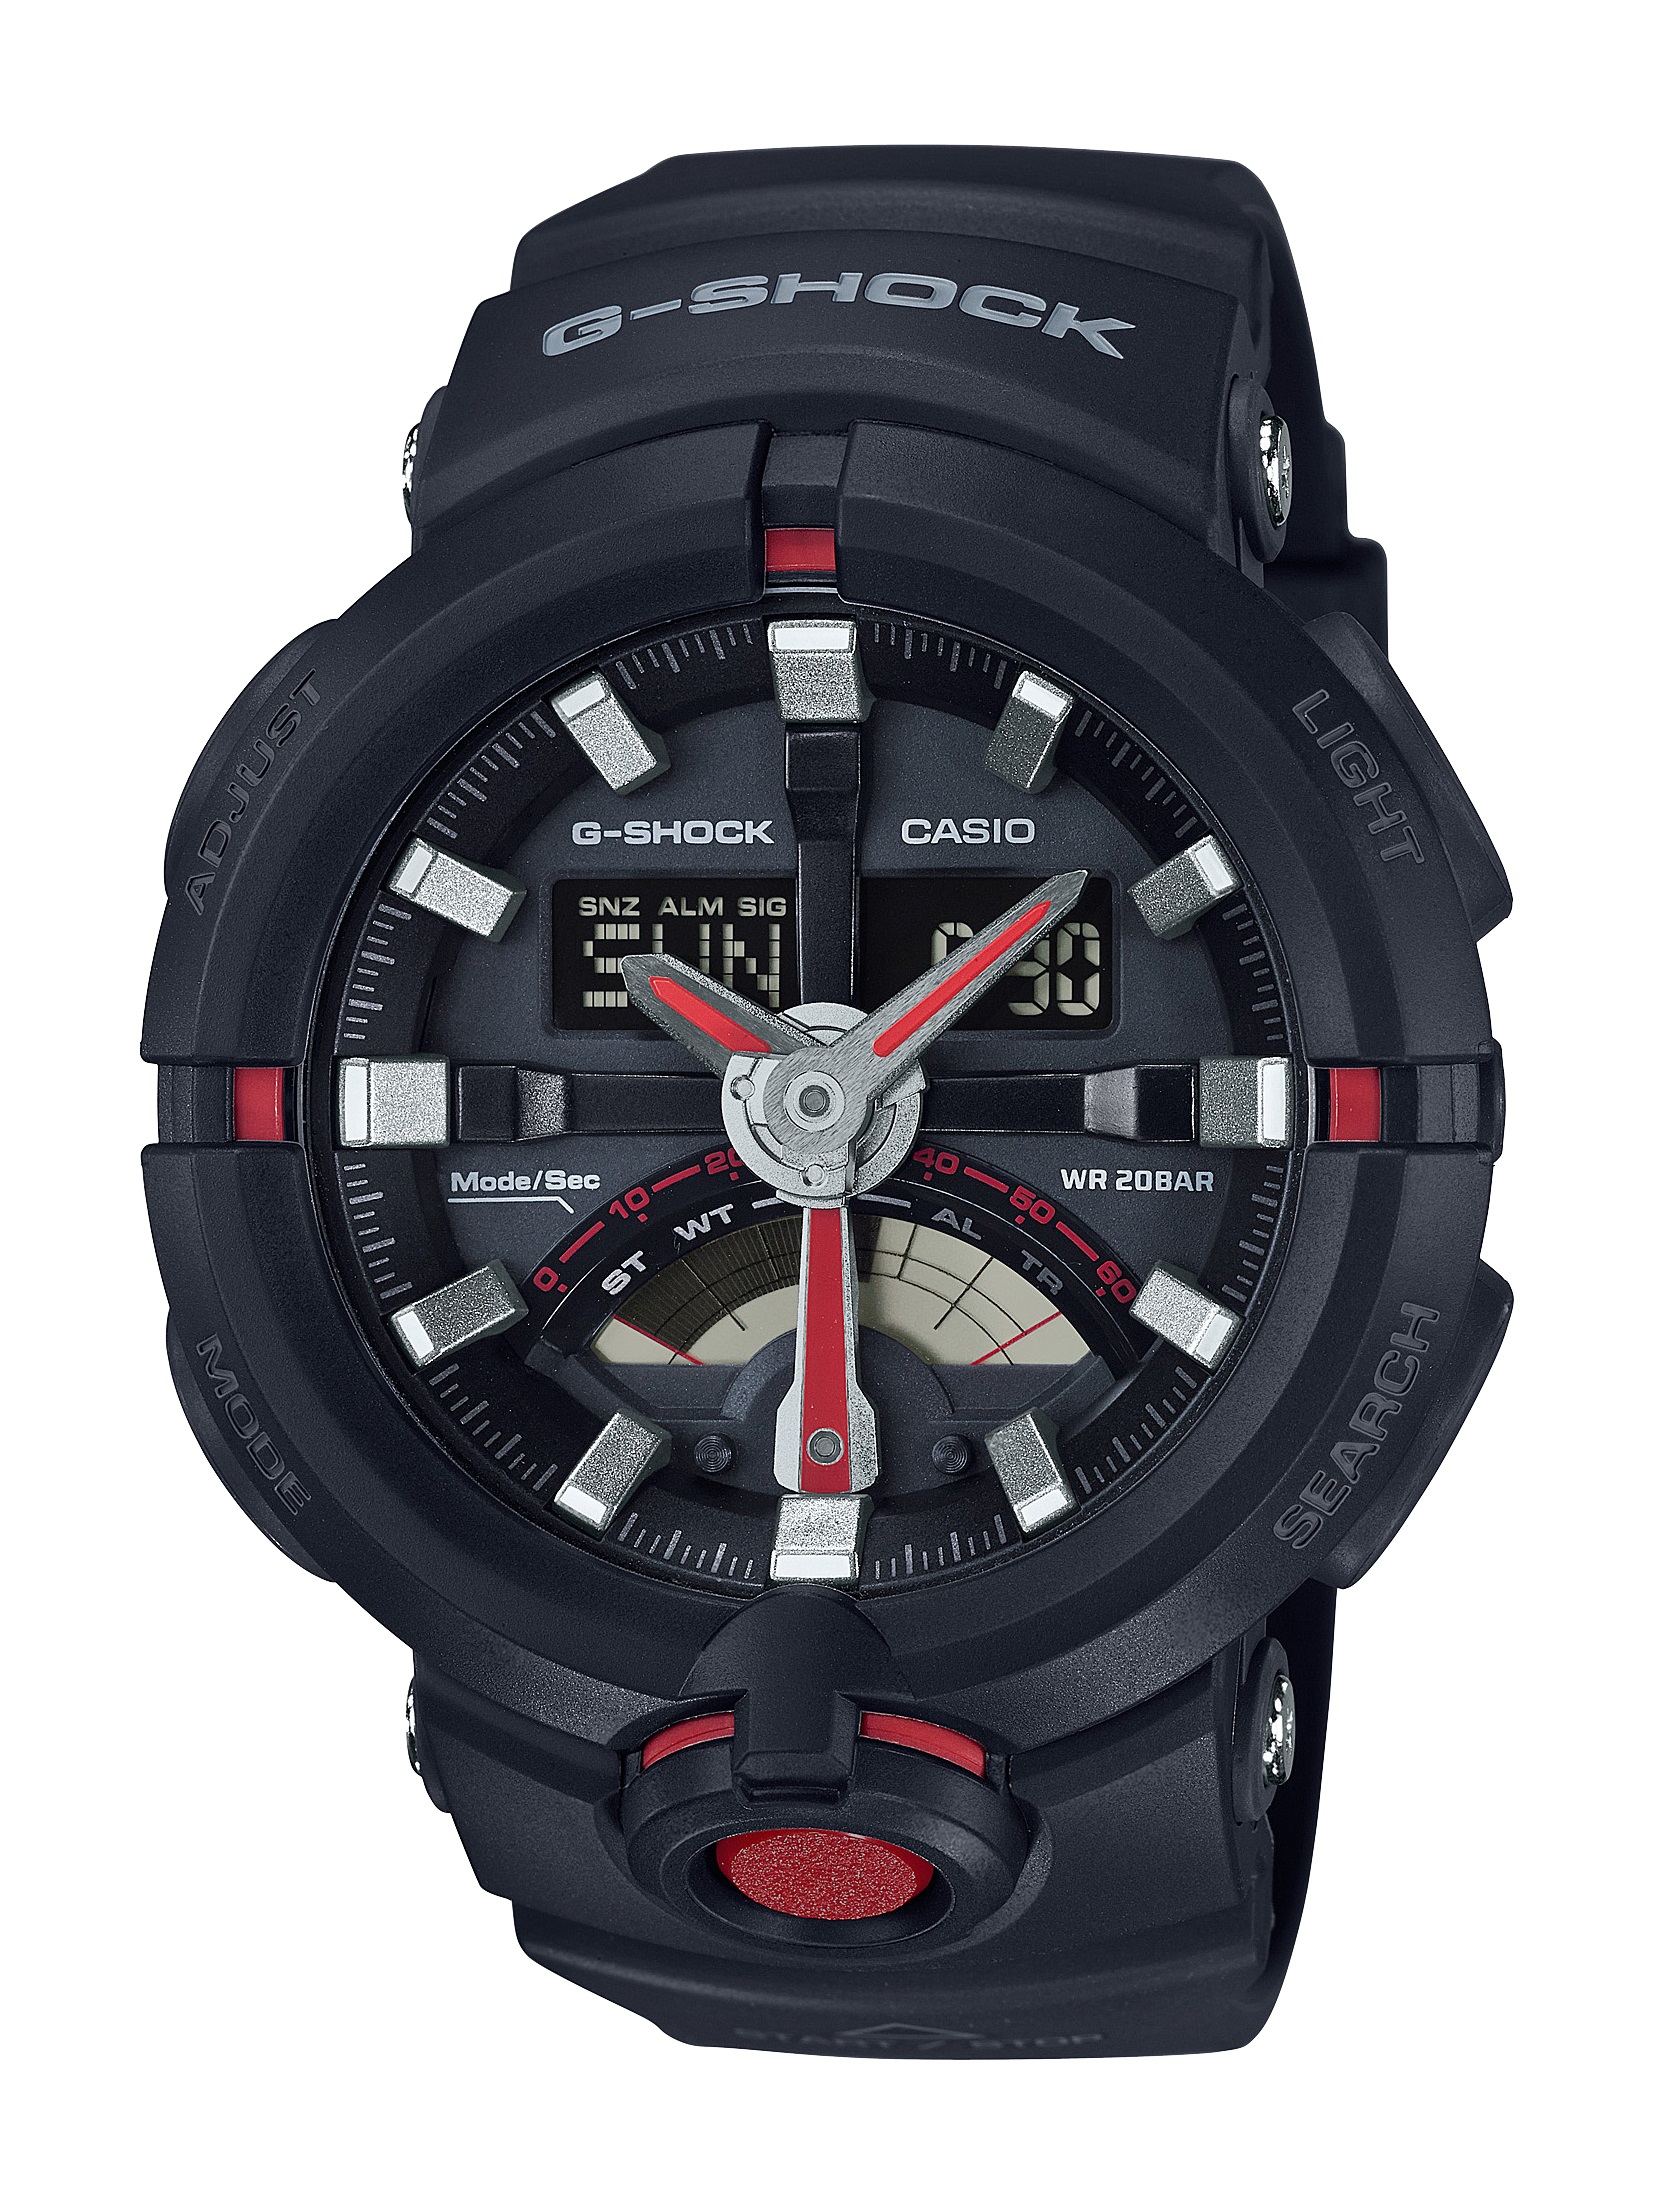 G-Shock Watches by Casio - Mens Watches - Digital Watches1654 x 2205